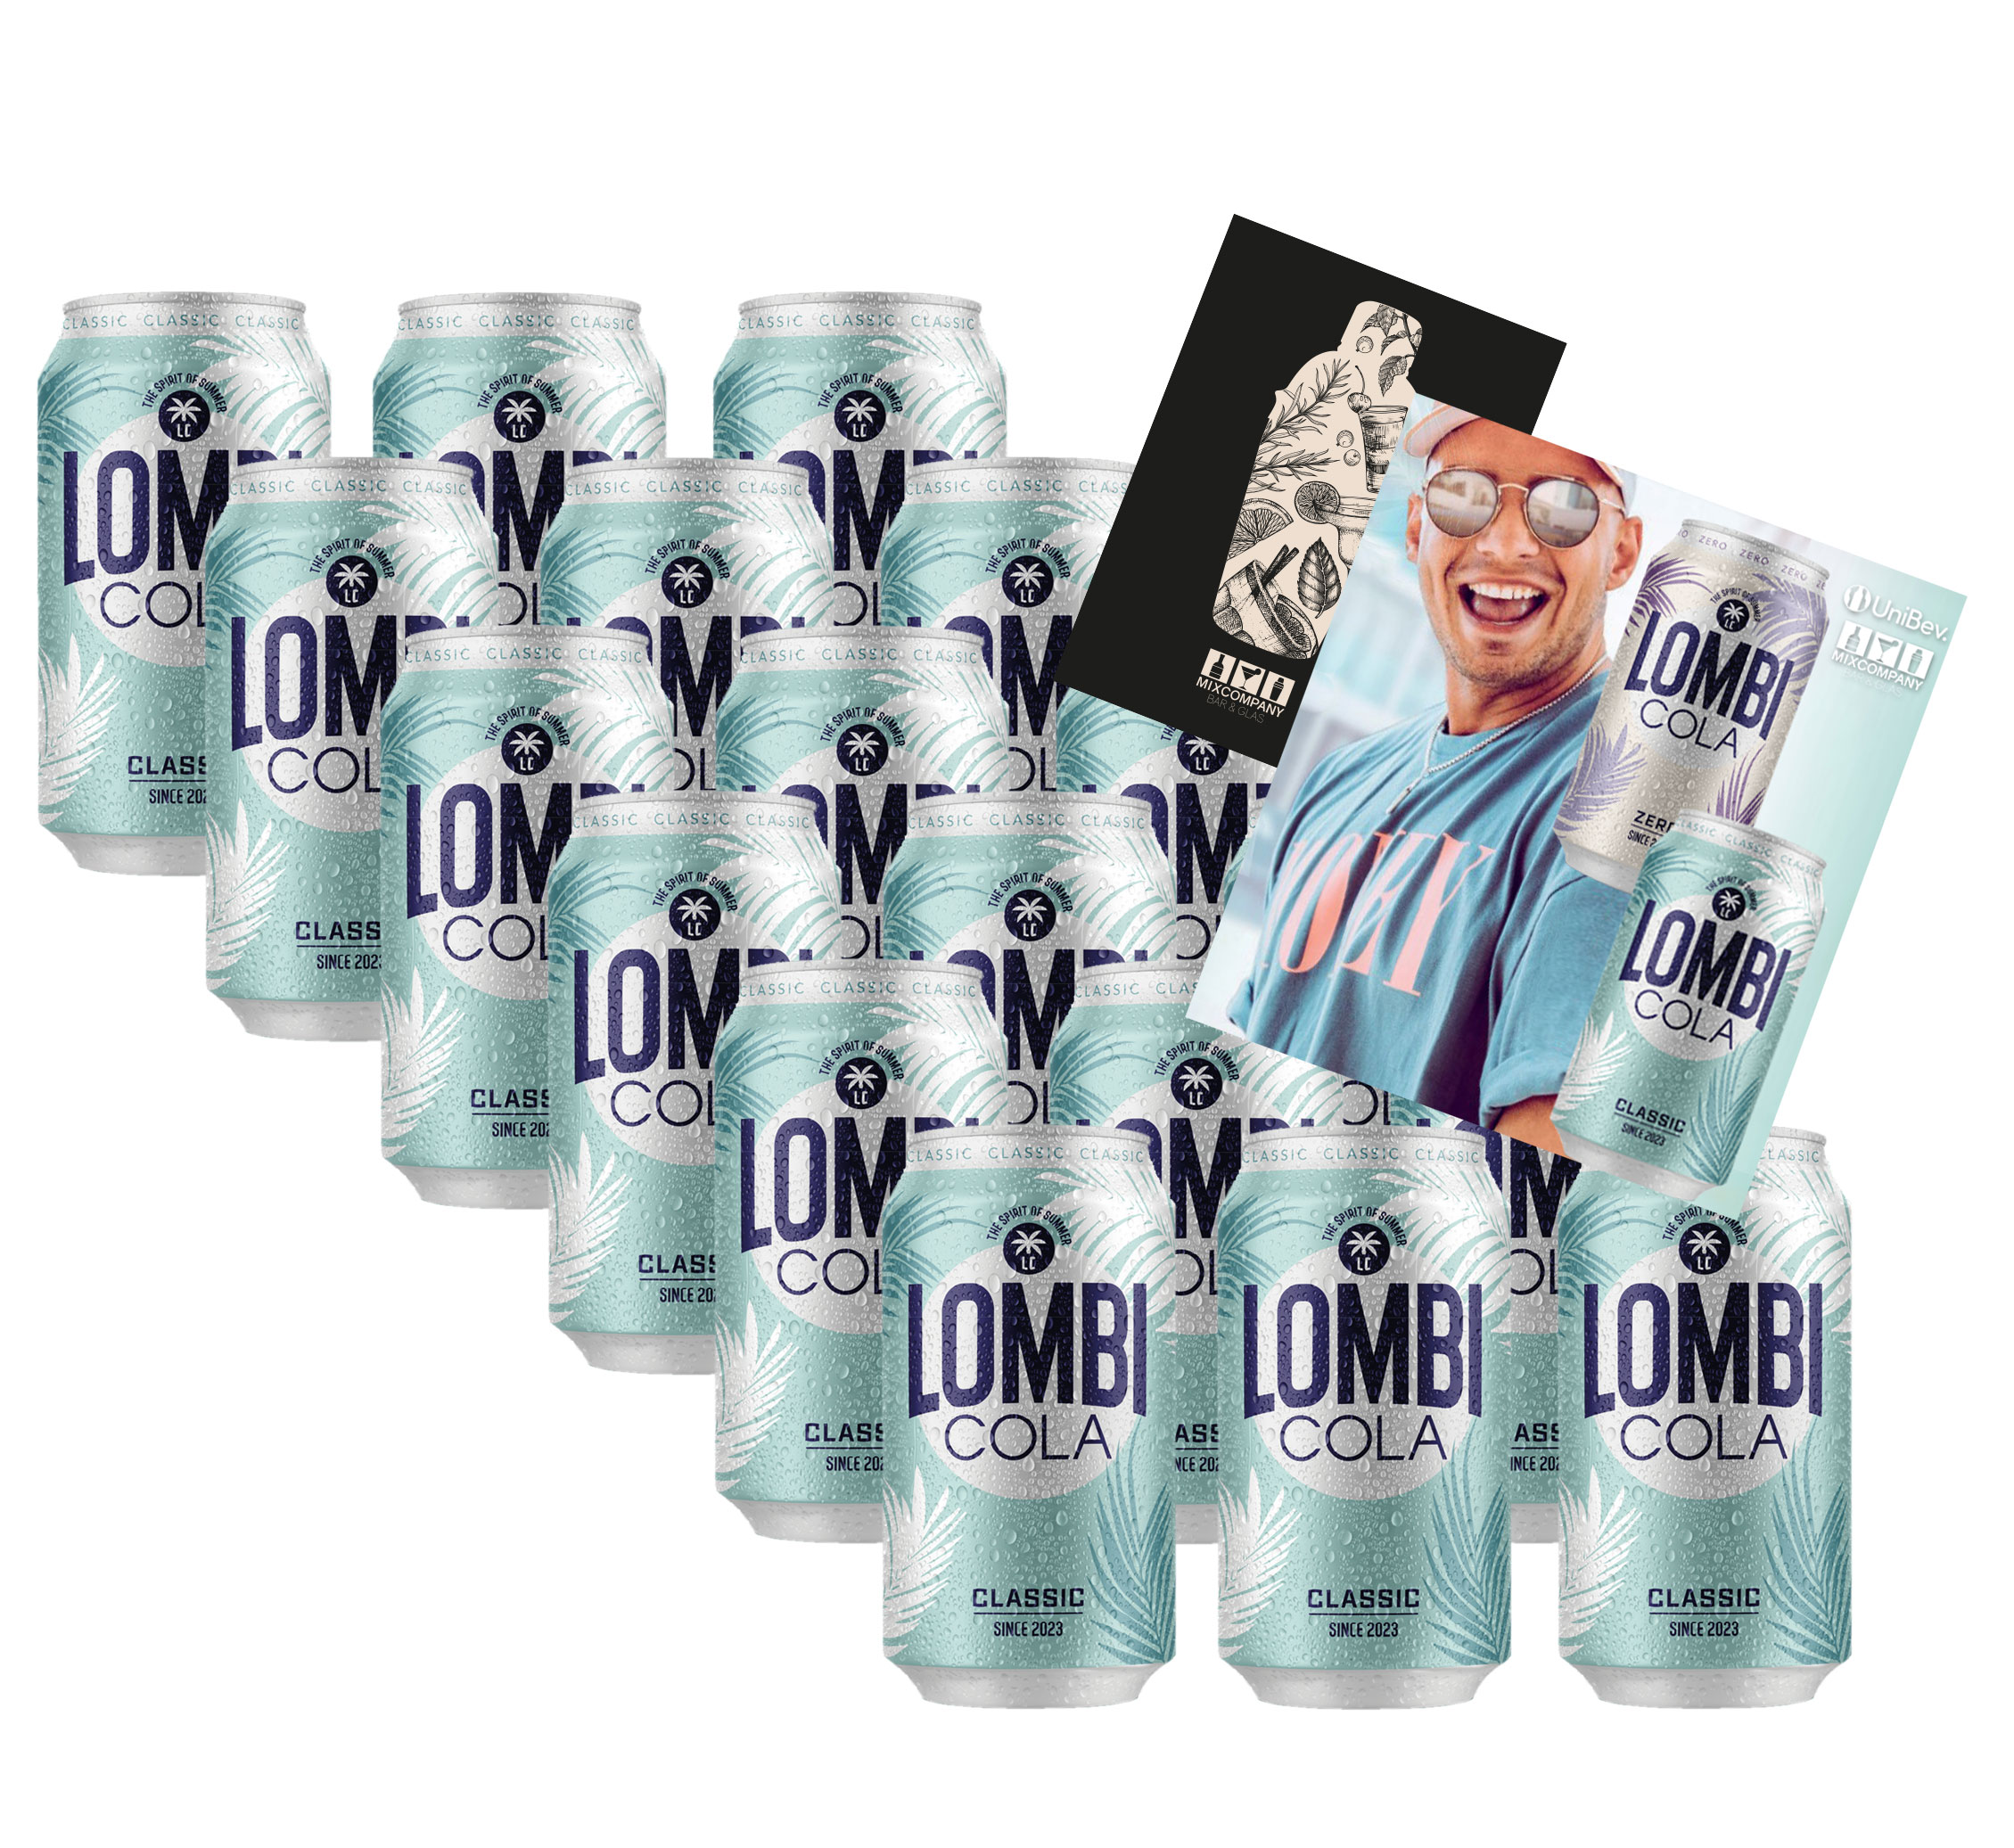 Lombi Cola - Sänger Pietro Lombardi Cola - 18er Set Lombi Cola 18x 0,33L mit Lombi Postkarte inkl. Pfand EINWEG 